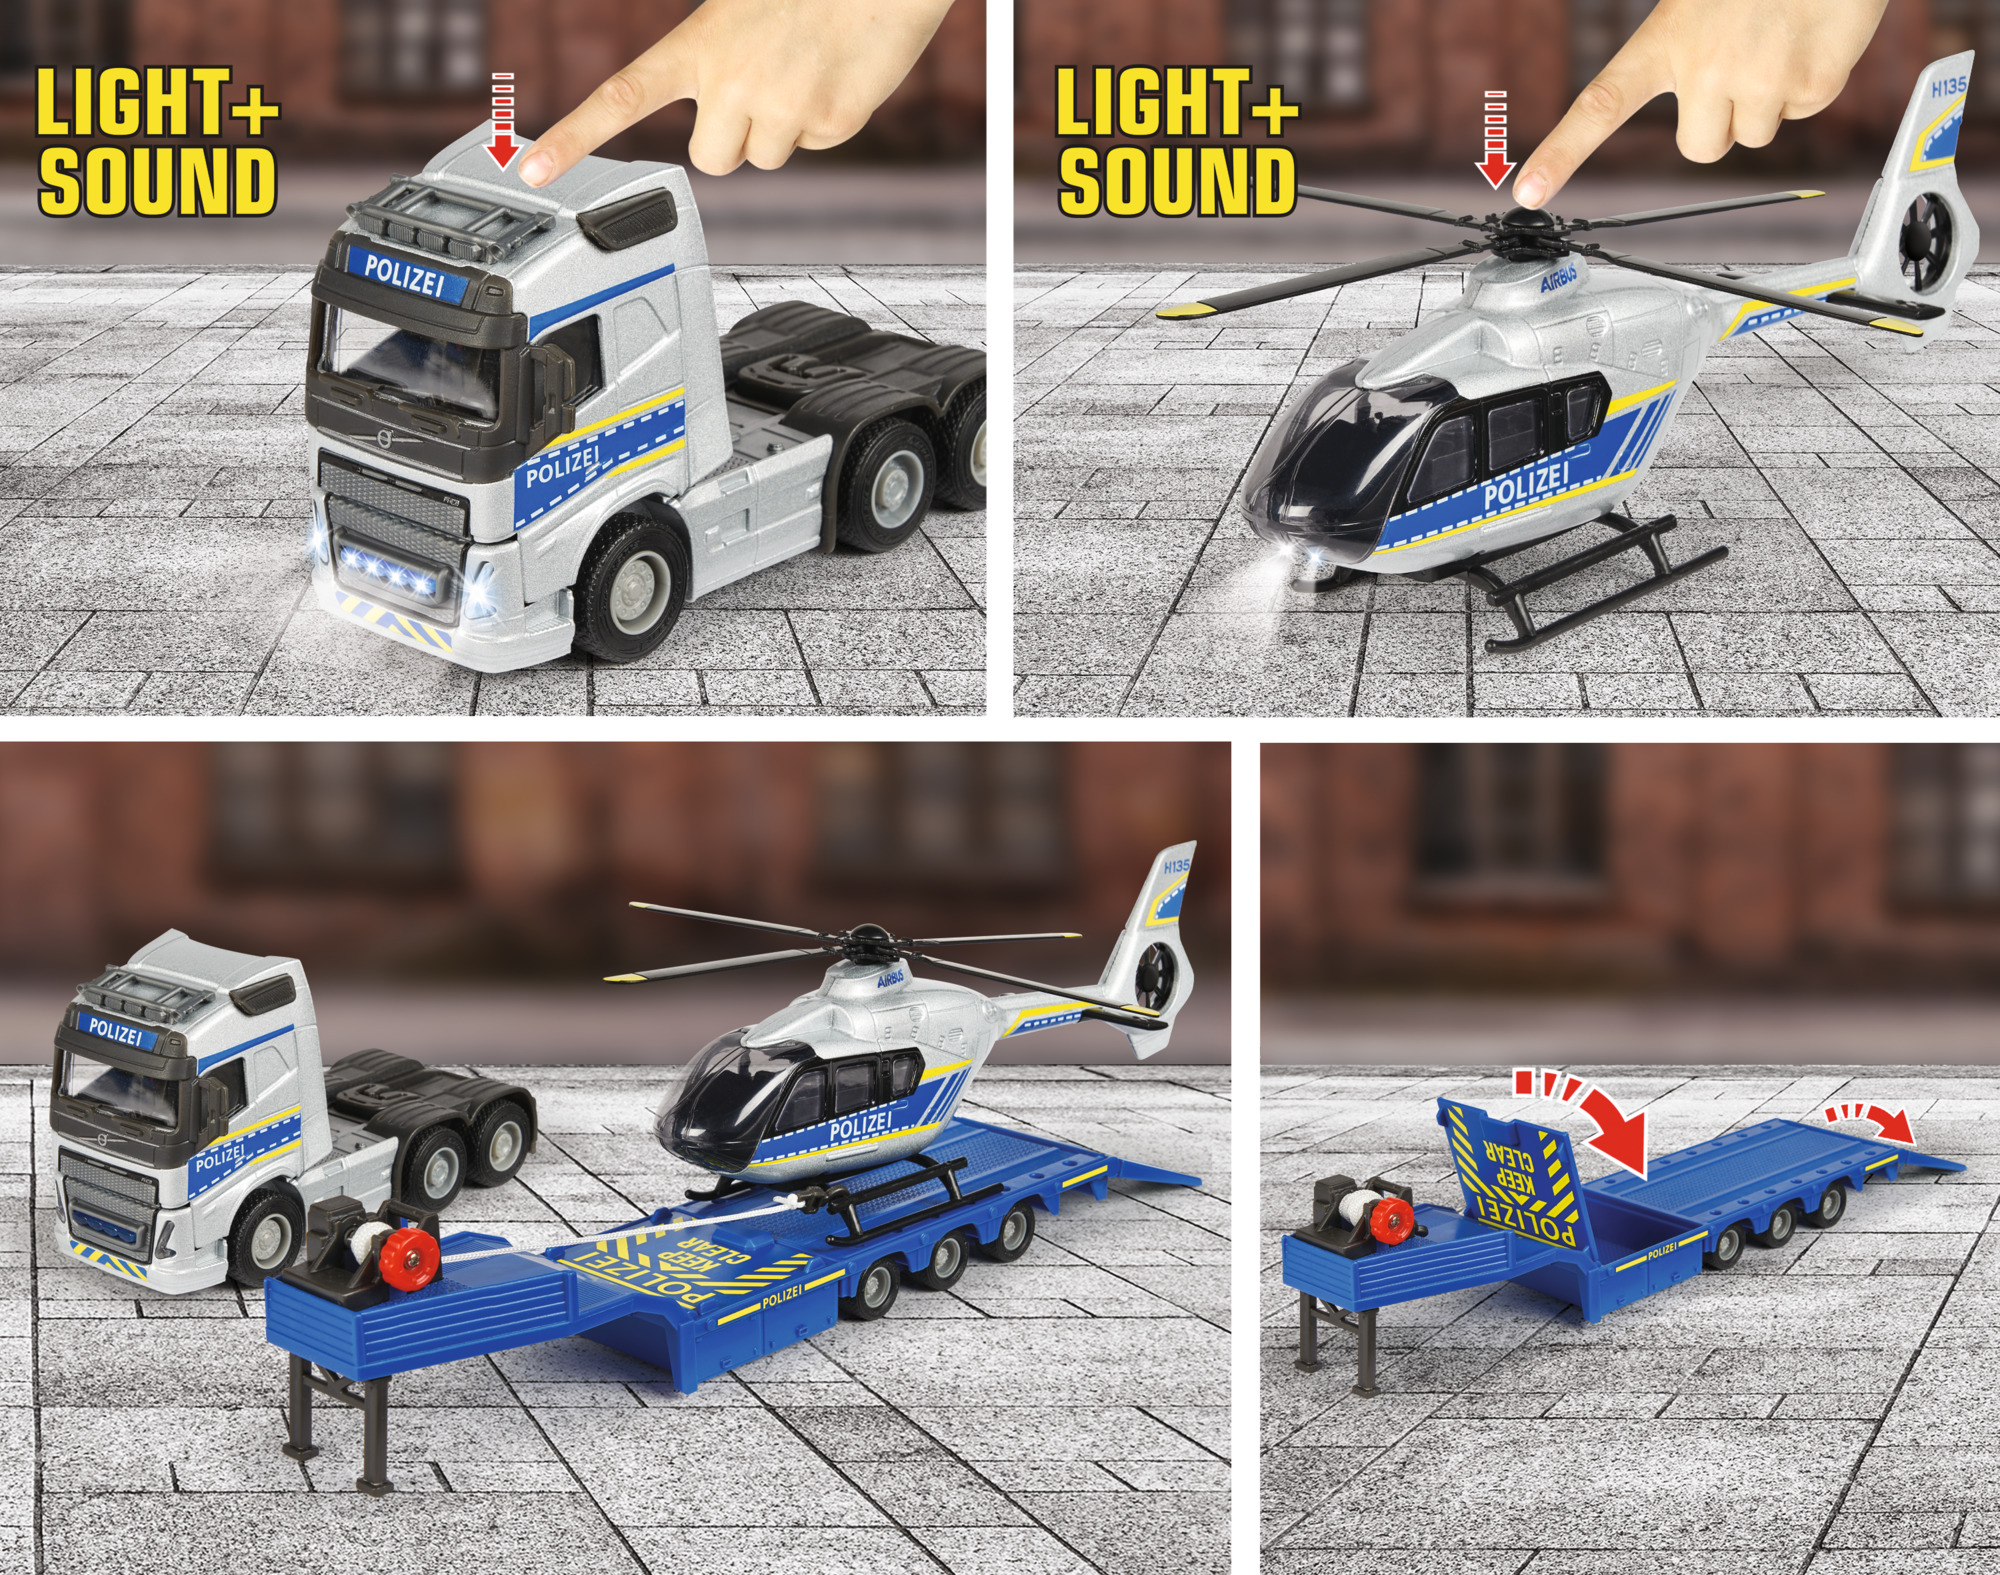 MAJORETTE Volvo Truck Helicopter Mehrfarbig Spielzeugauto + Police Airbus